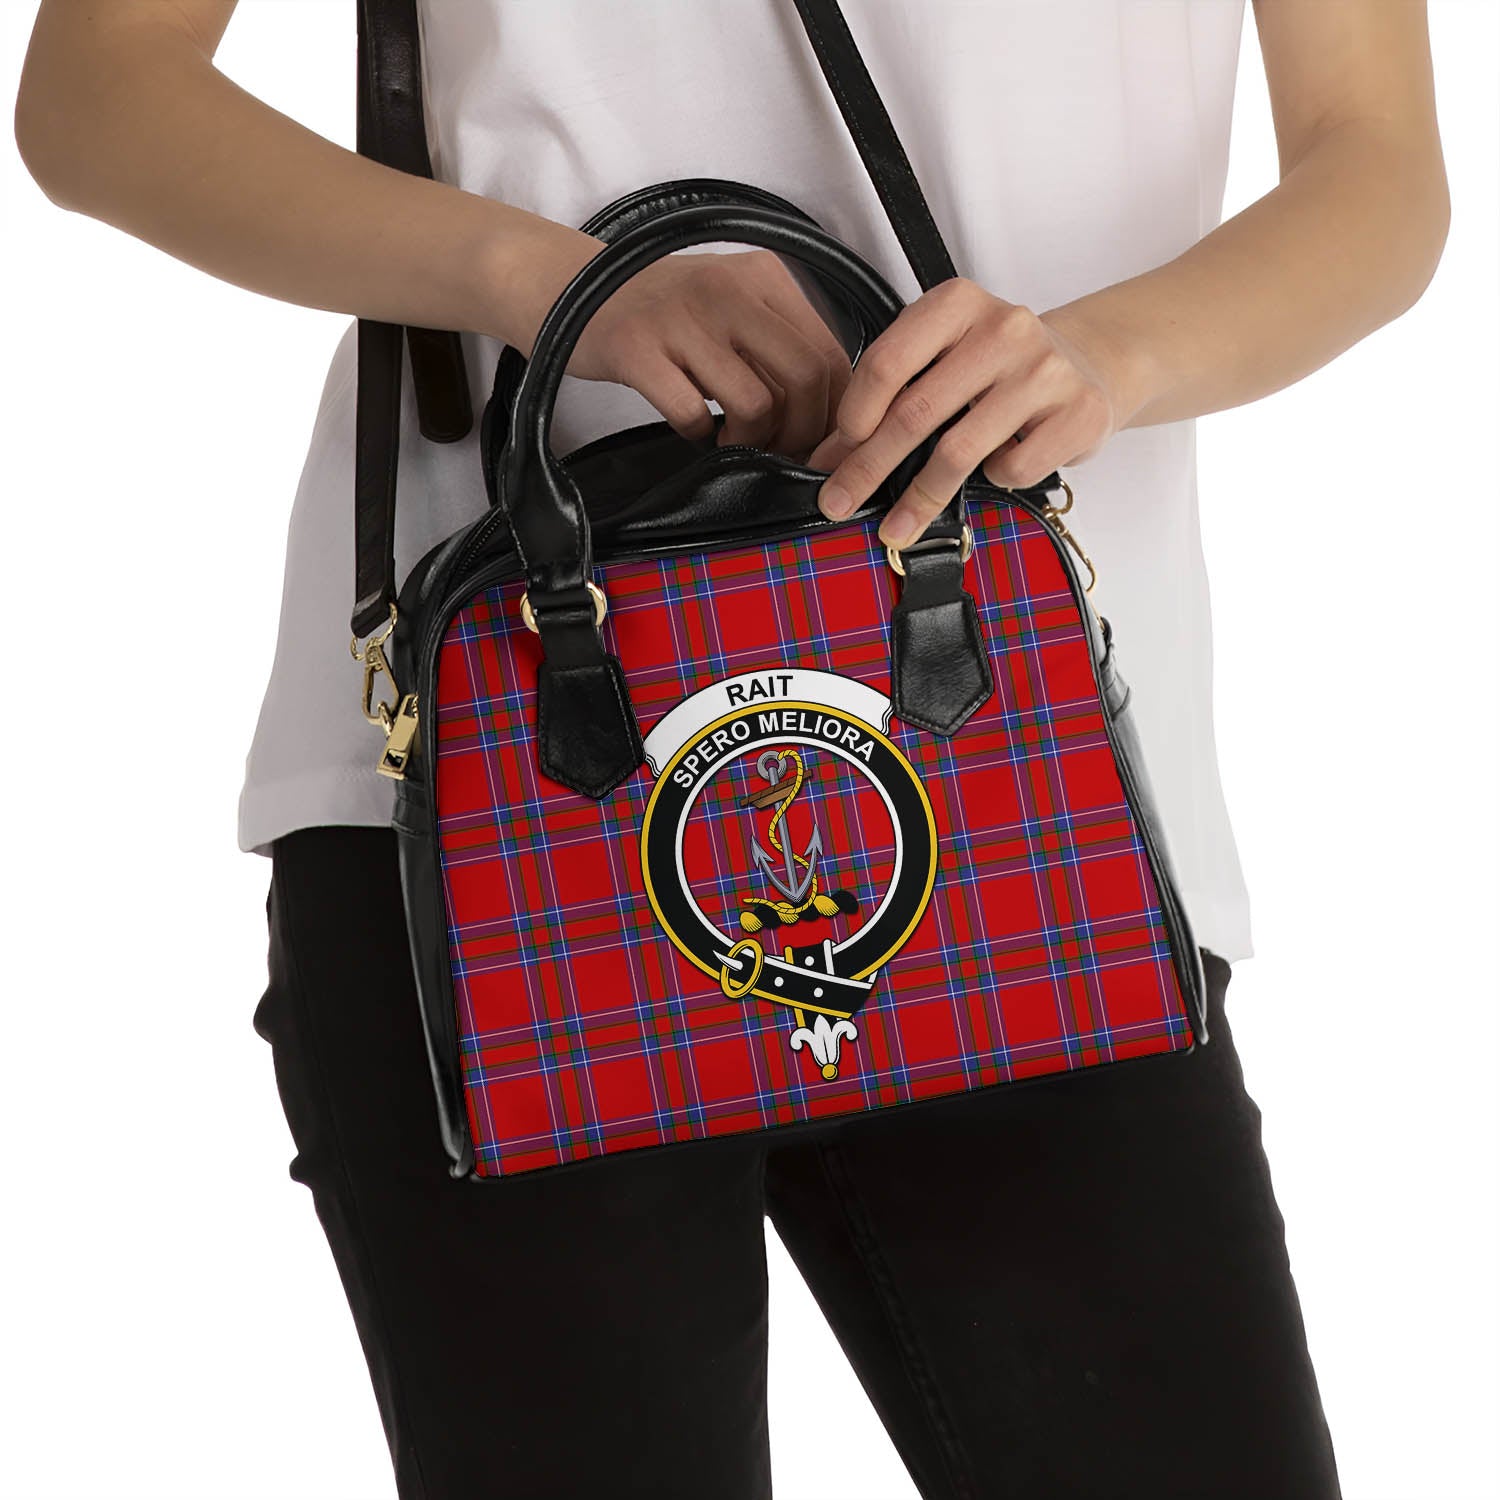 Rait Tartan Shoulder Handbags with Family Crest - Tartanvibesclothing